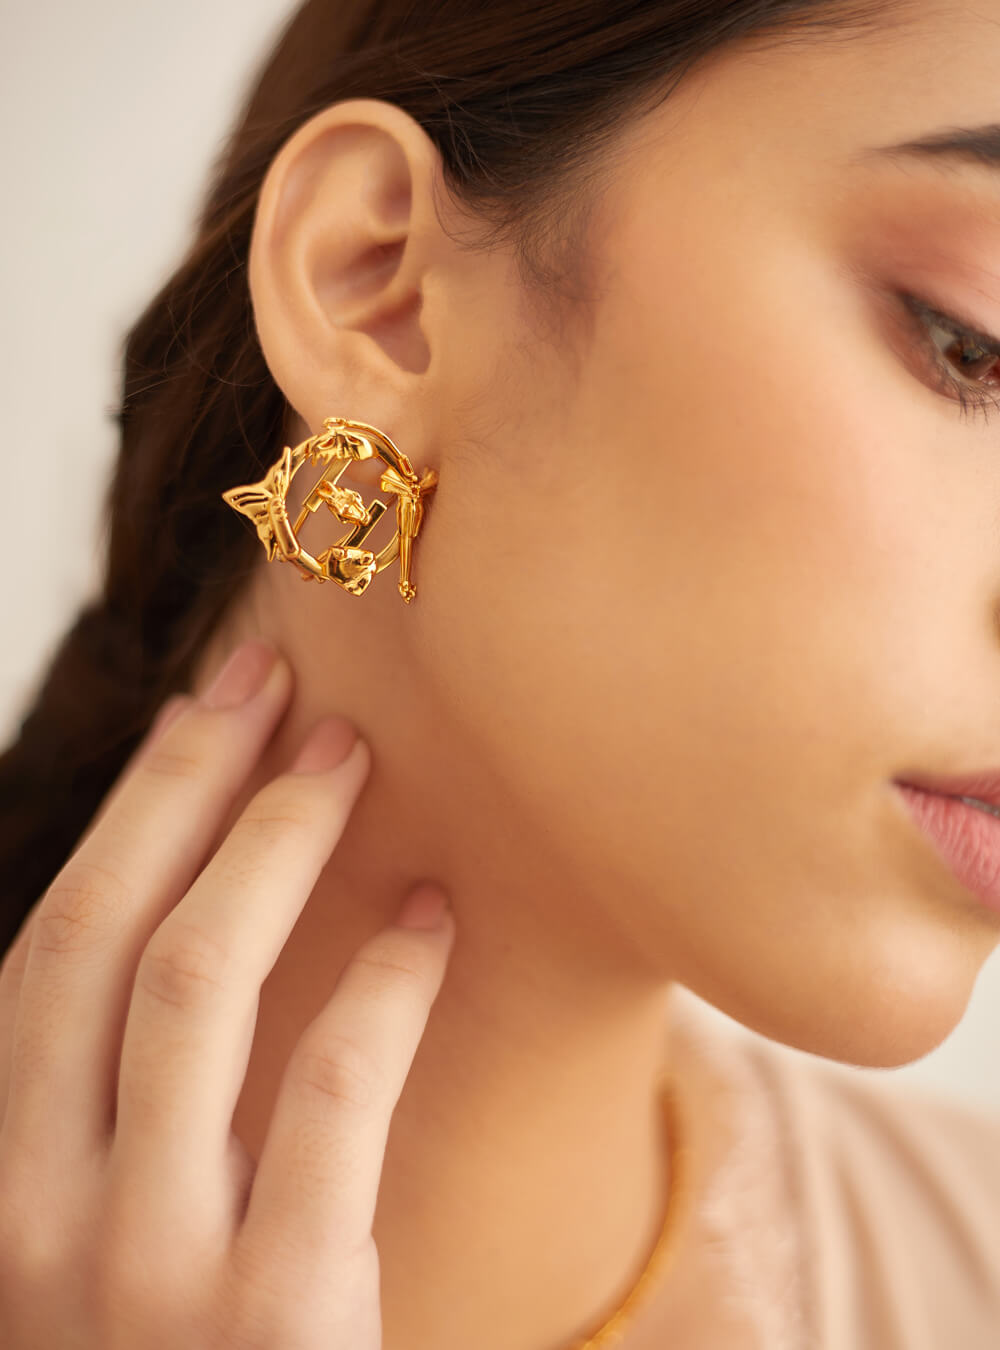 Bridal gold earrings collections|gold earrings design|gold jewellery|latest  gold earrings|earrings - YouTube